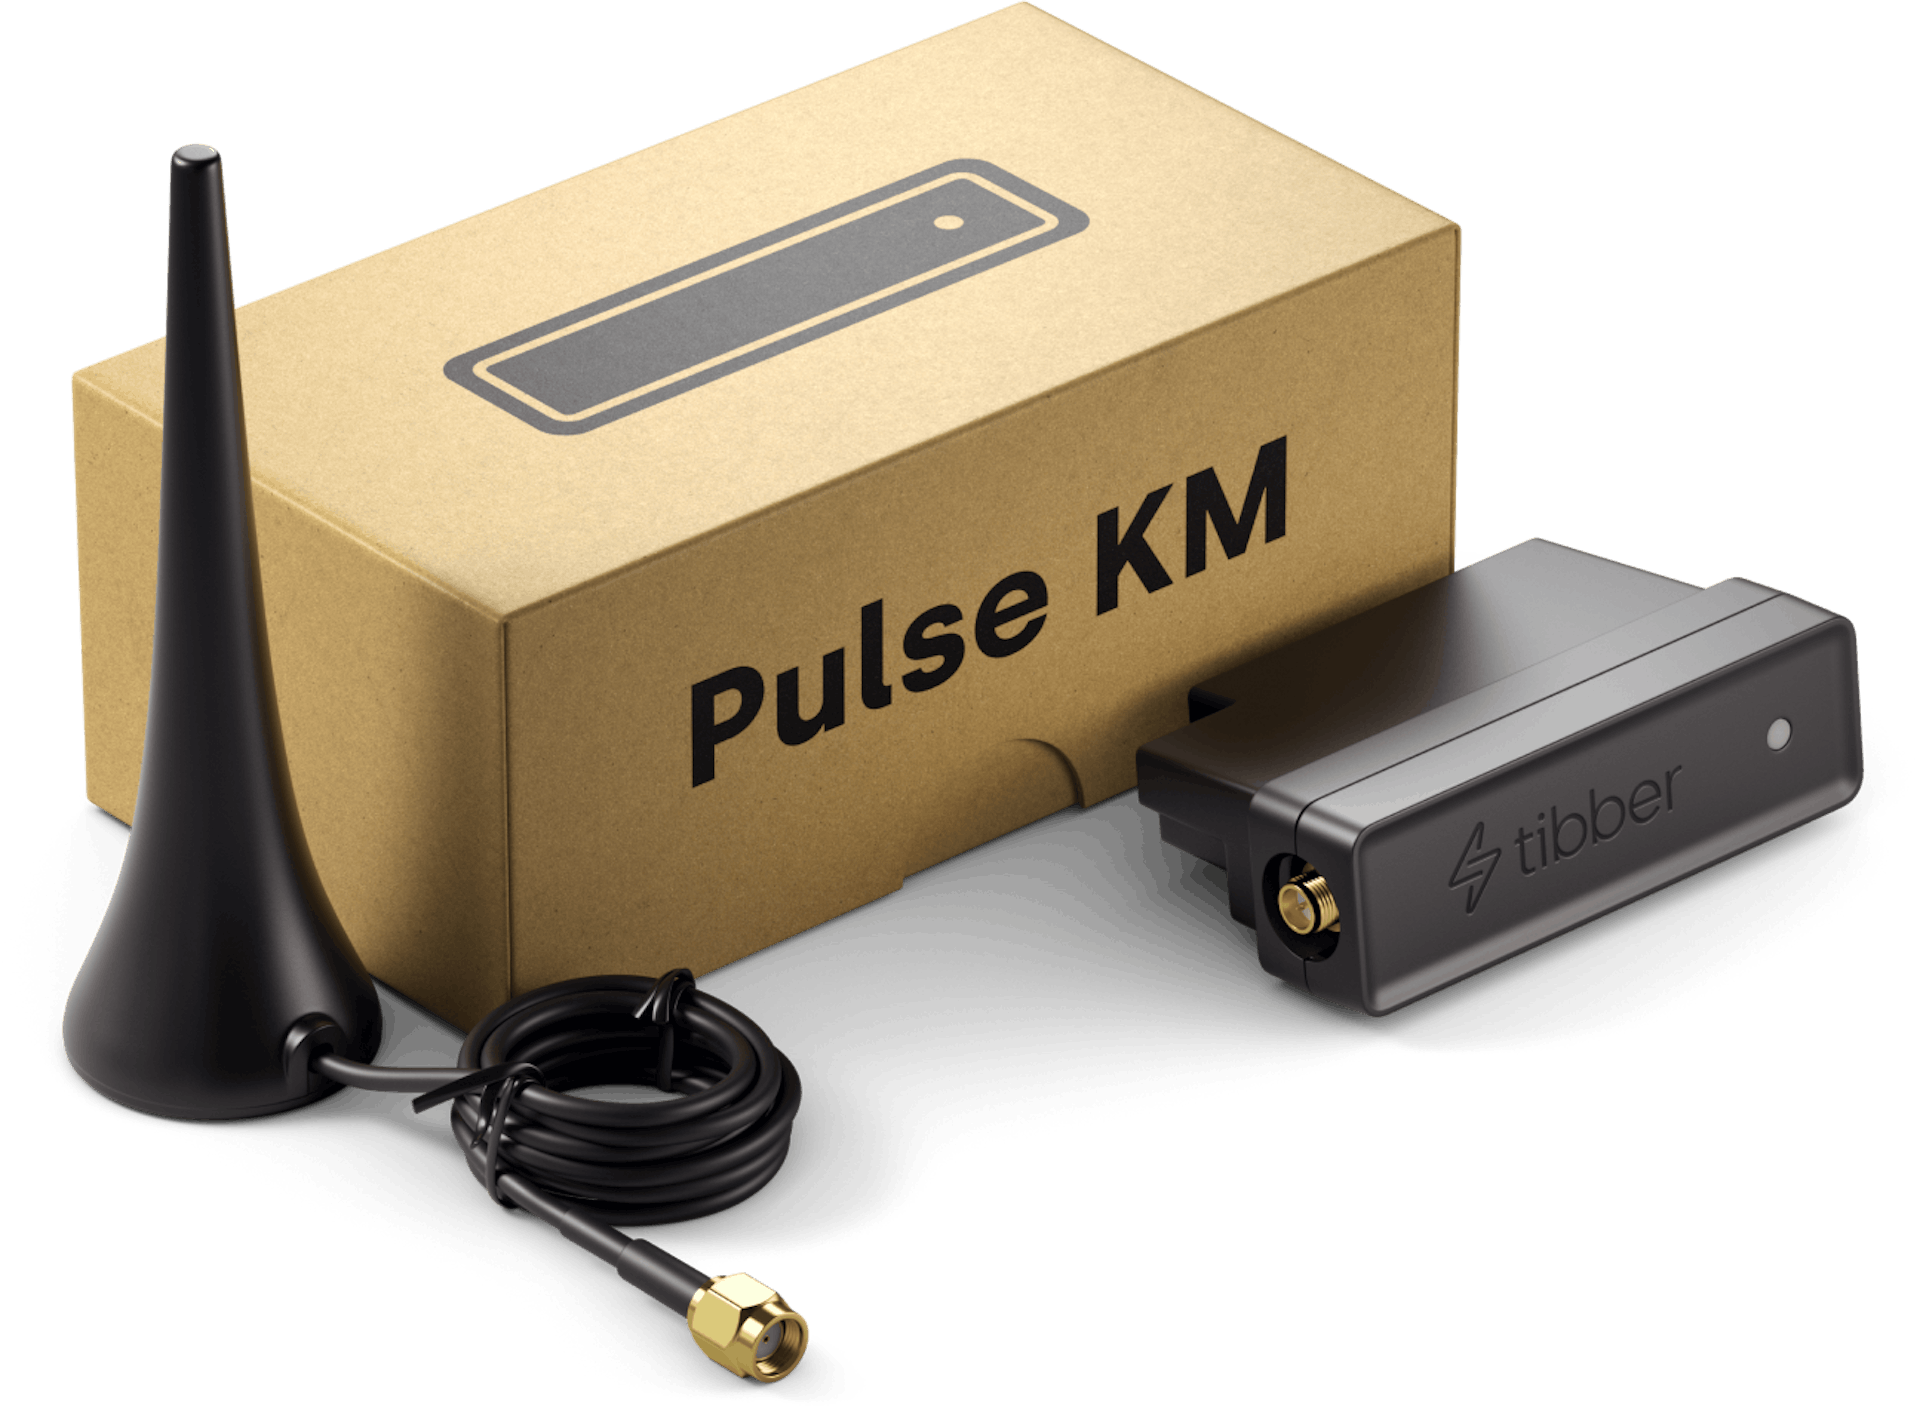 Pulse KM - Packaging image